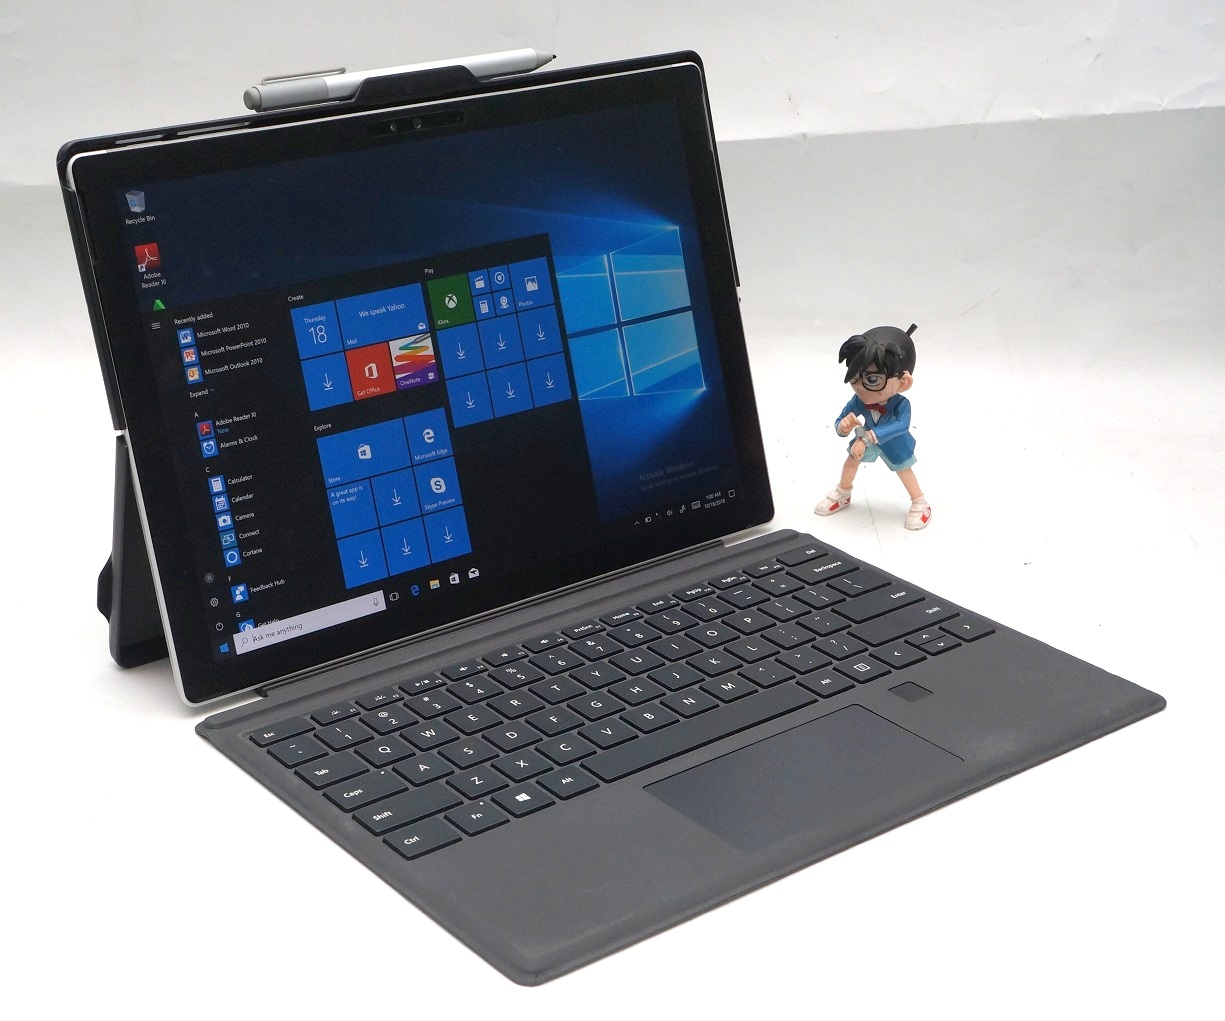 Jual Microsoft Surface Pro 4 Bekas | Jual Beli Laptop